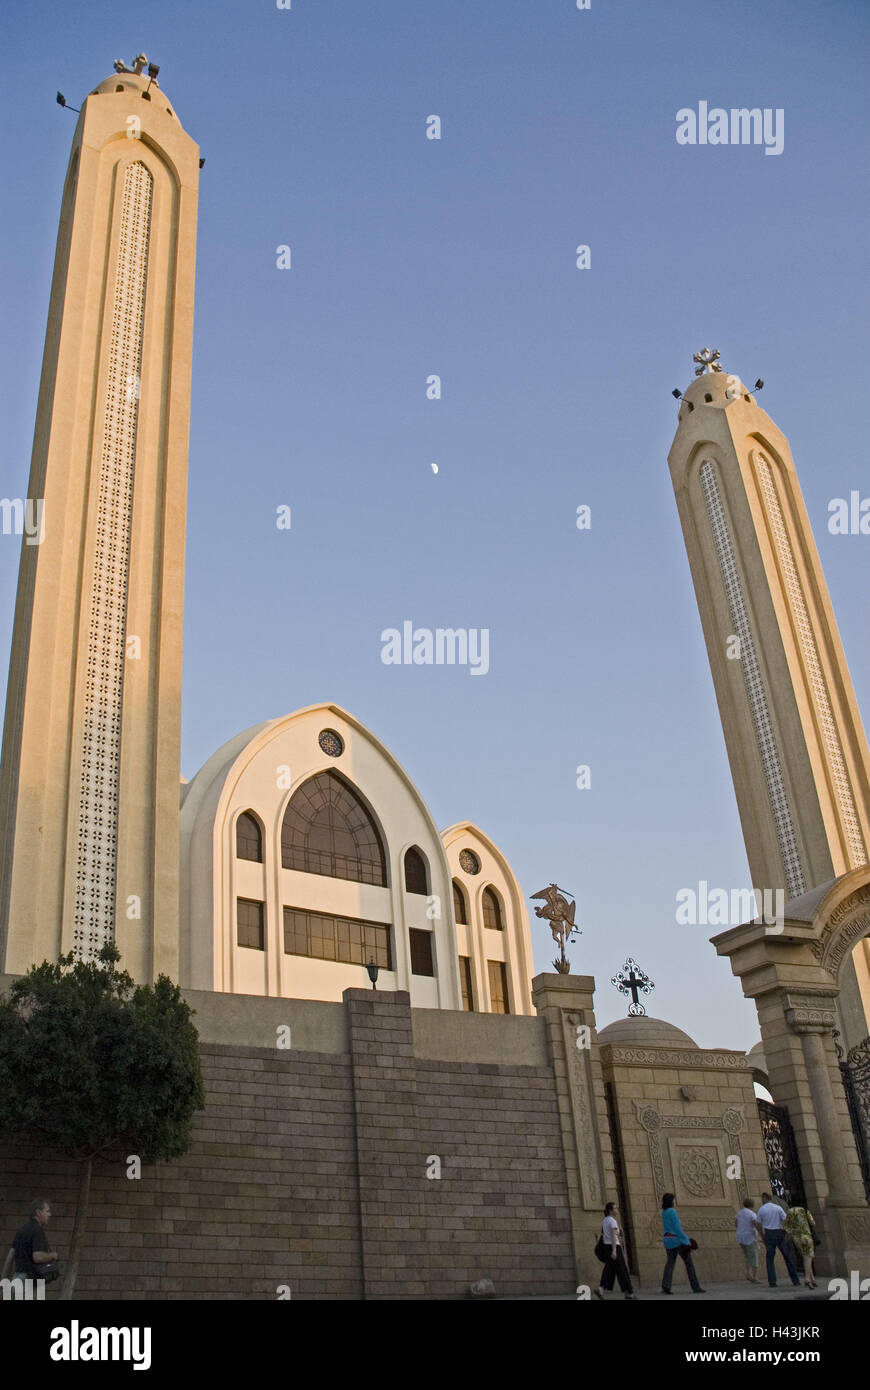 Iglesia copta fotografías e imágenes de alta resolución - Alamy